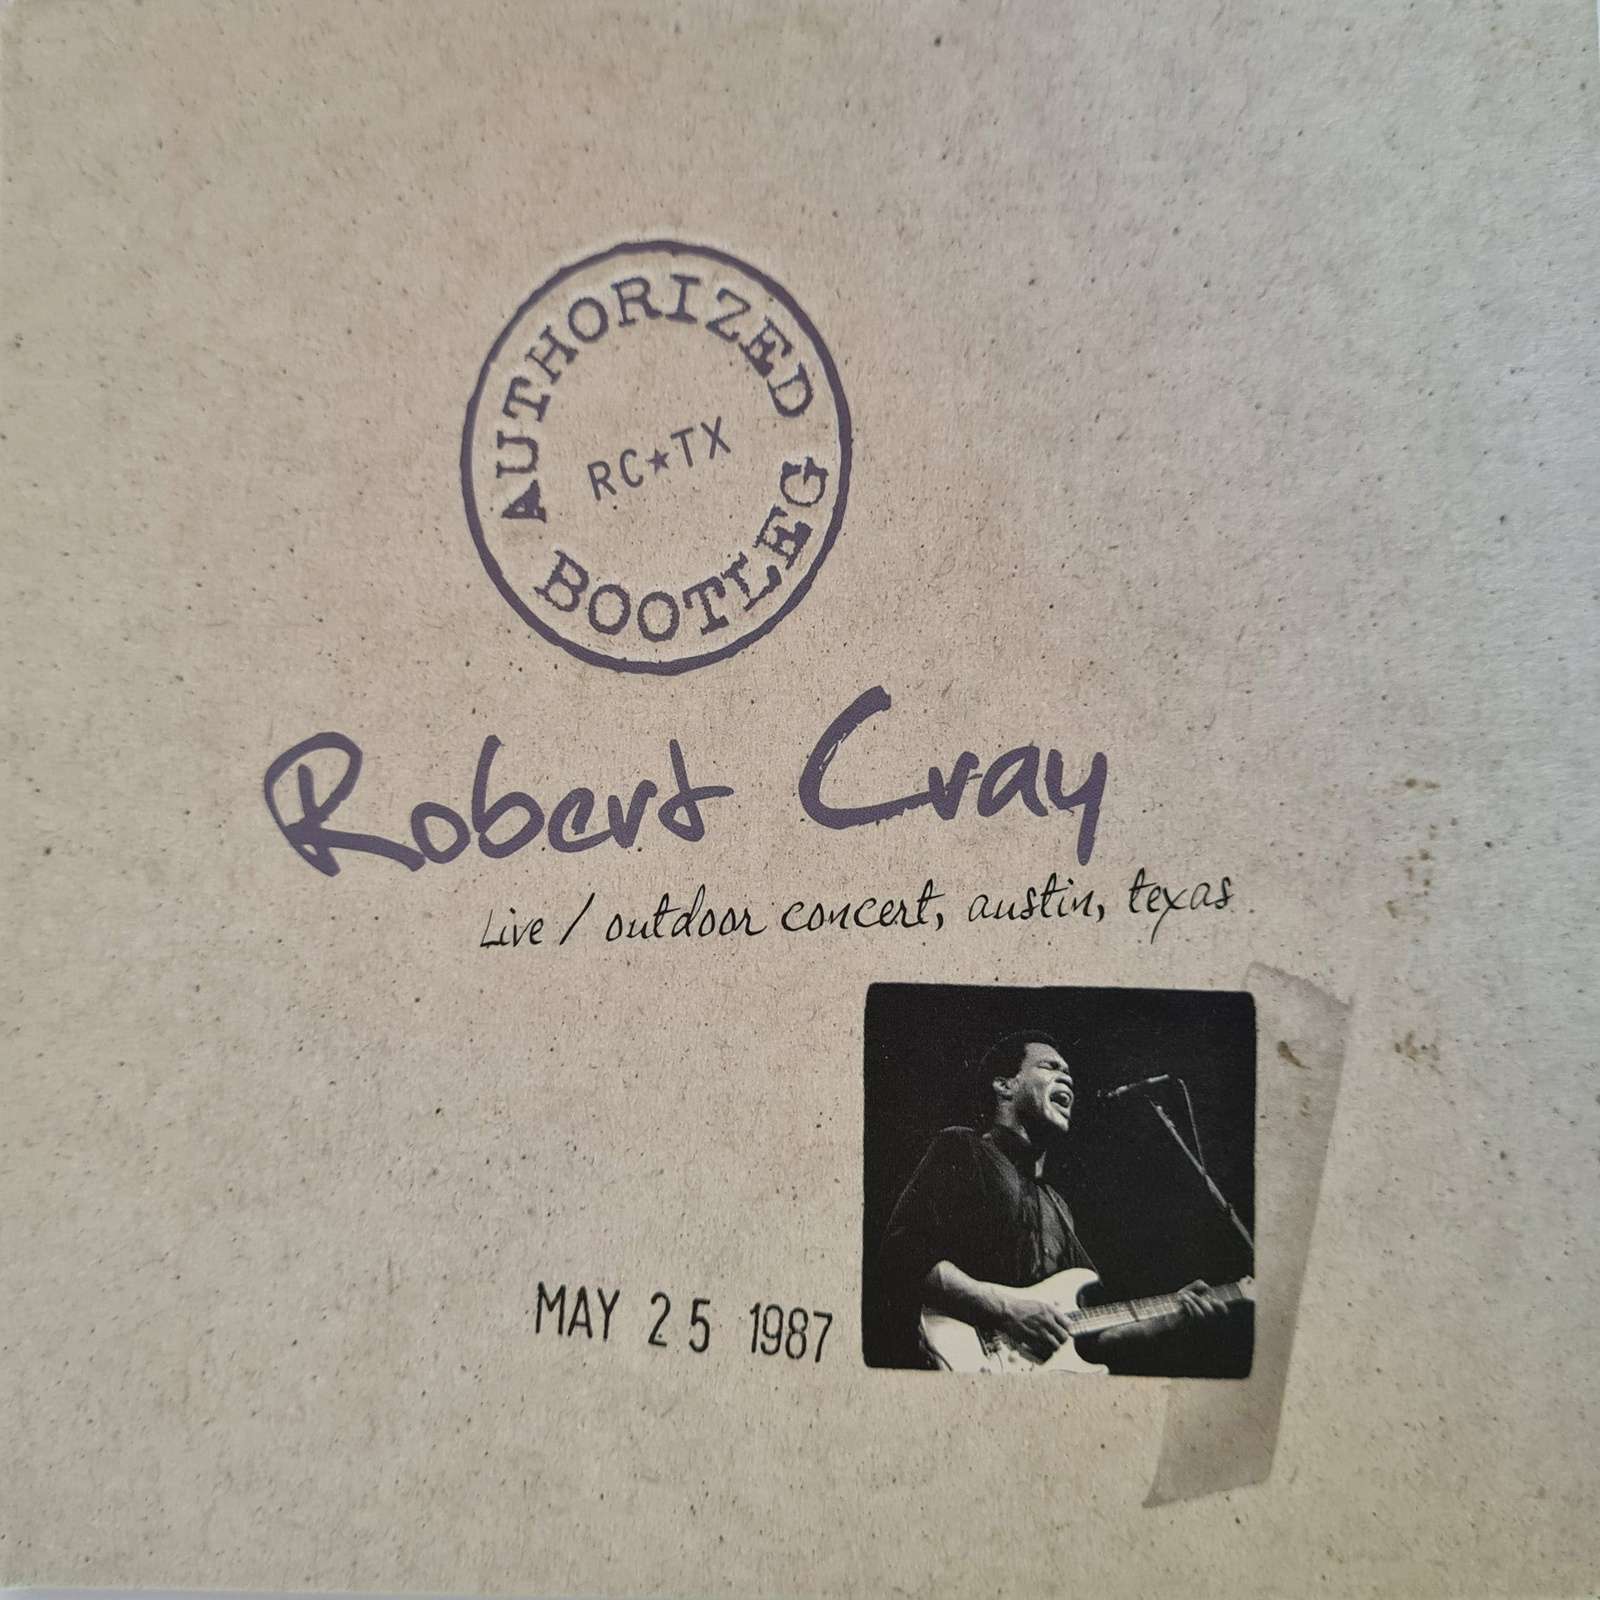 Robert Cray - Live - Outdoor Concert, Austion, Texas, May 25 1987 (CD)